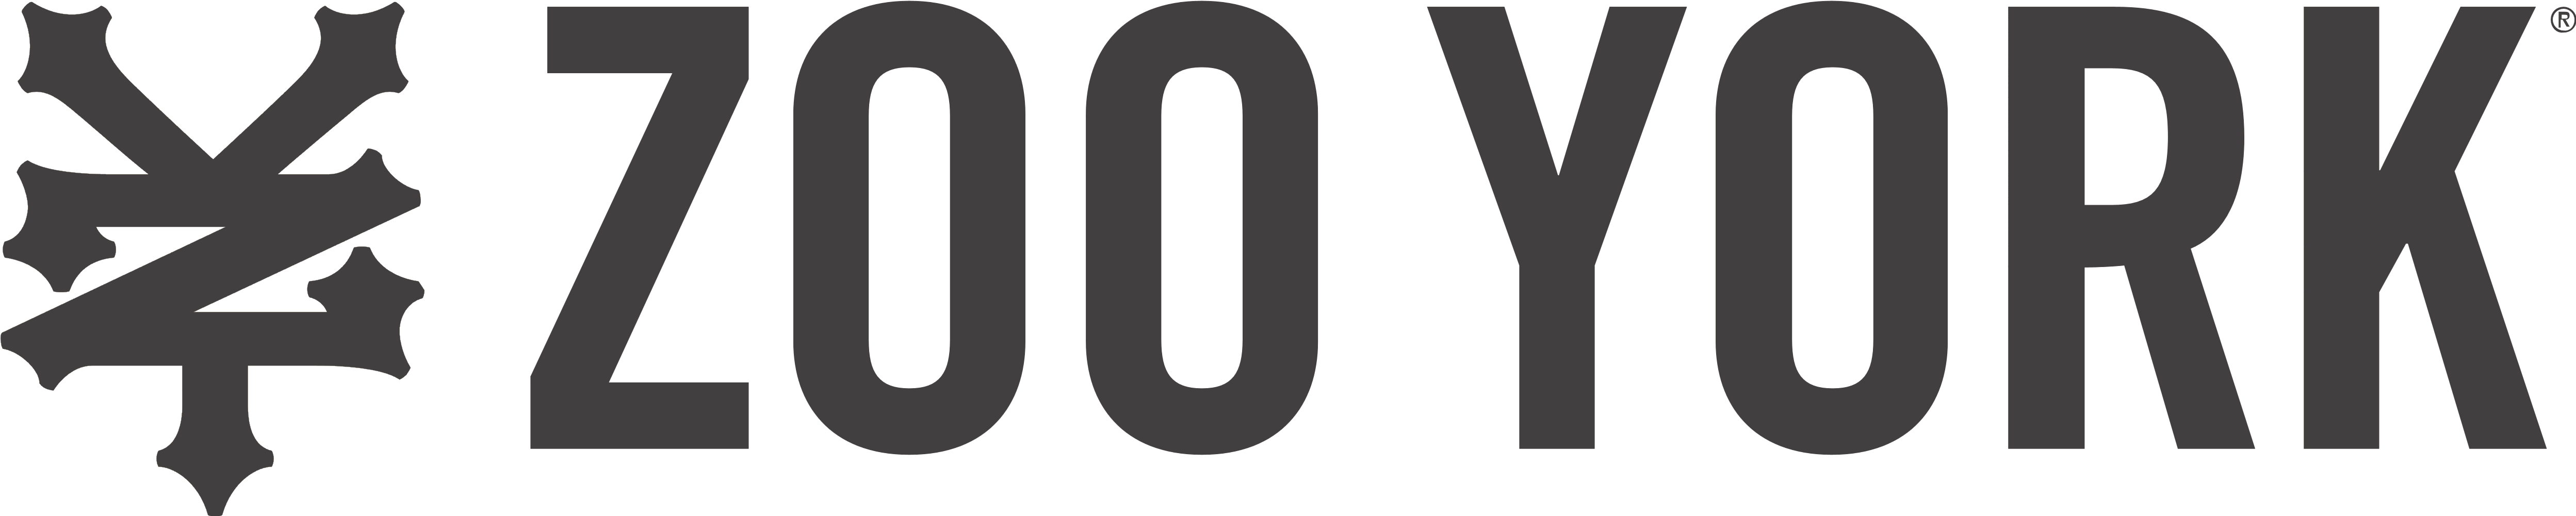 Zoo York Logos Download New Lyft Emblem New Lyft Emblem - Zoo York Logo Png (5100x1080), Png Download